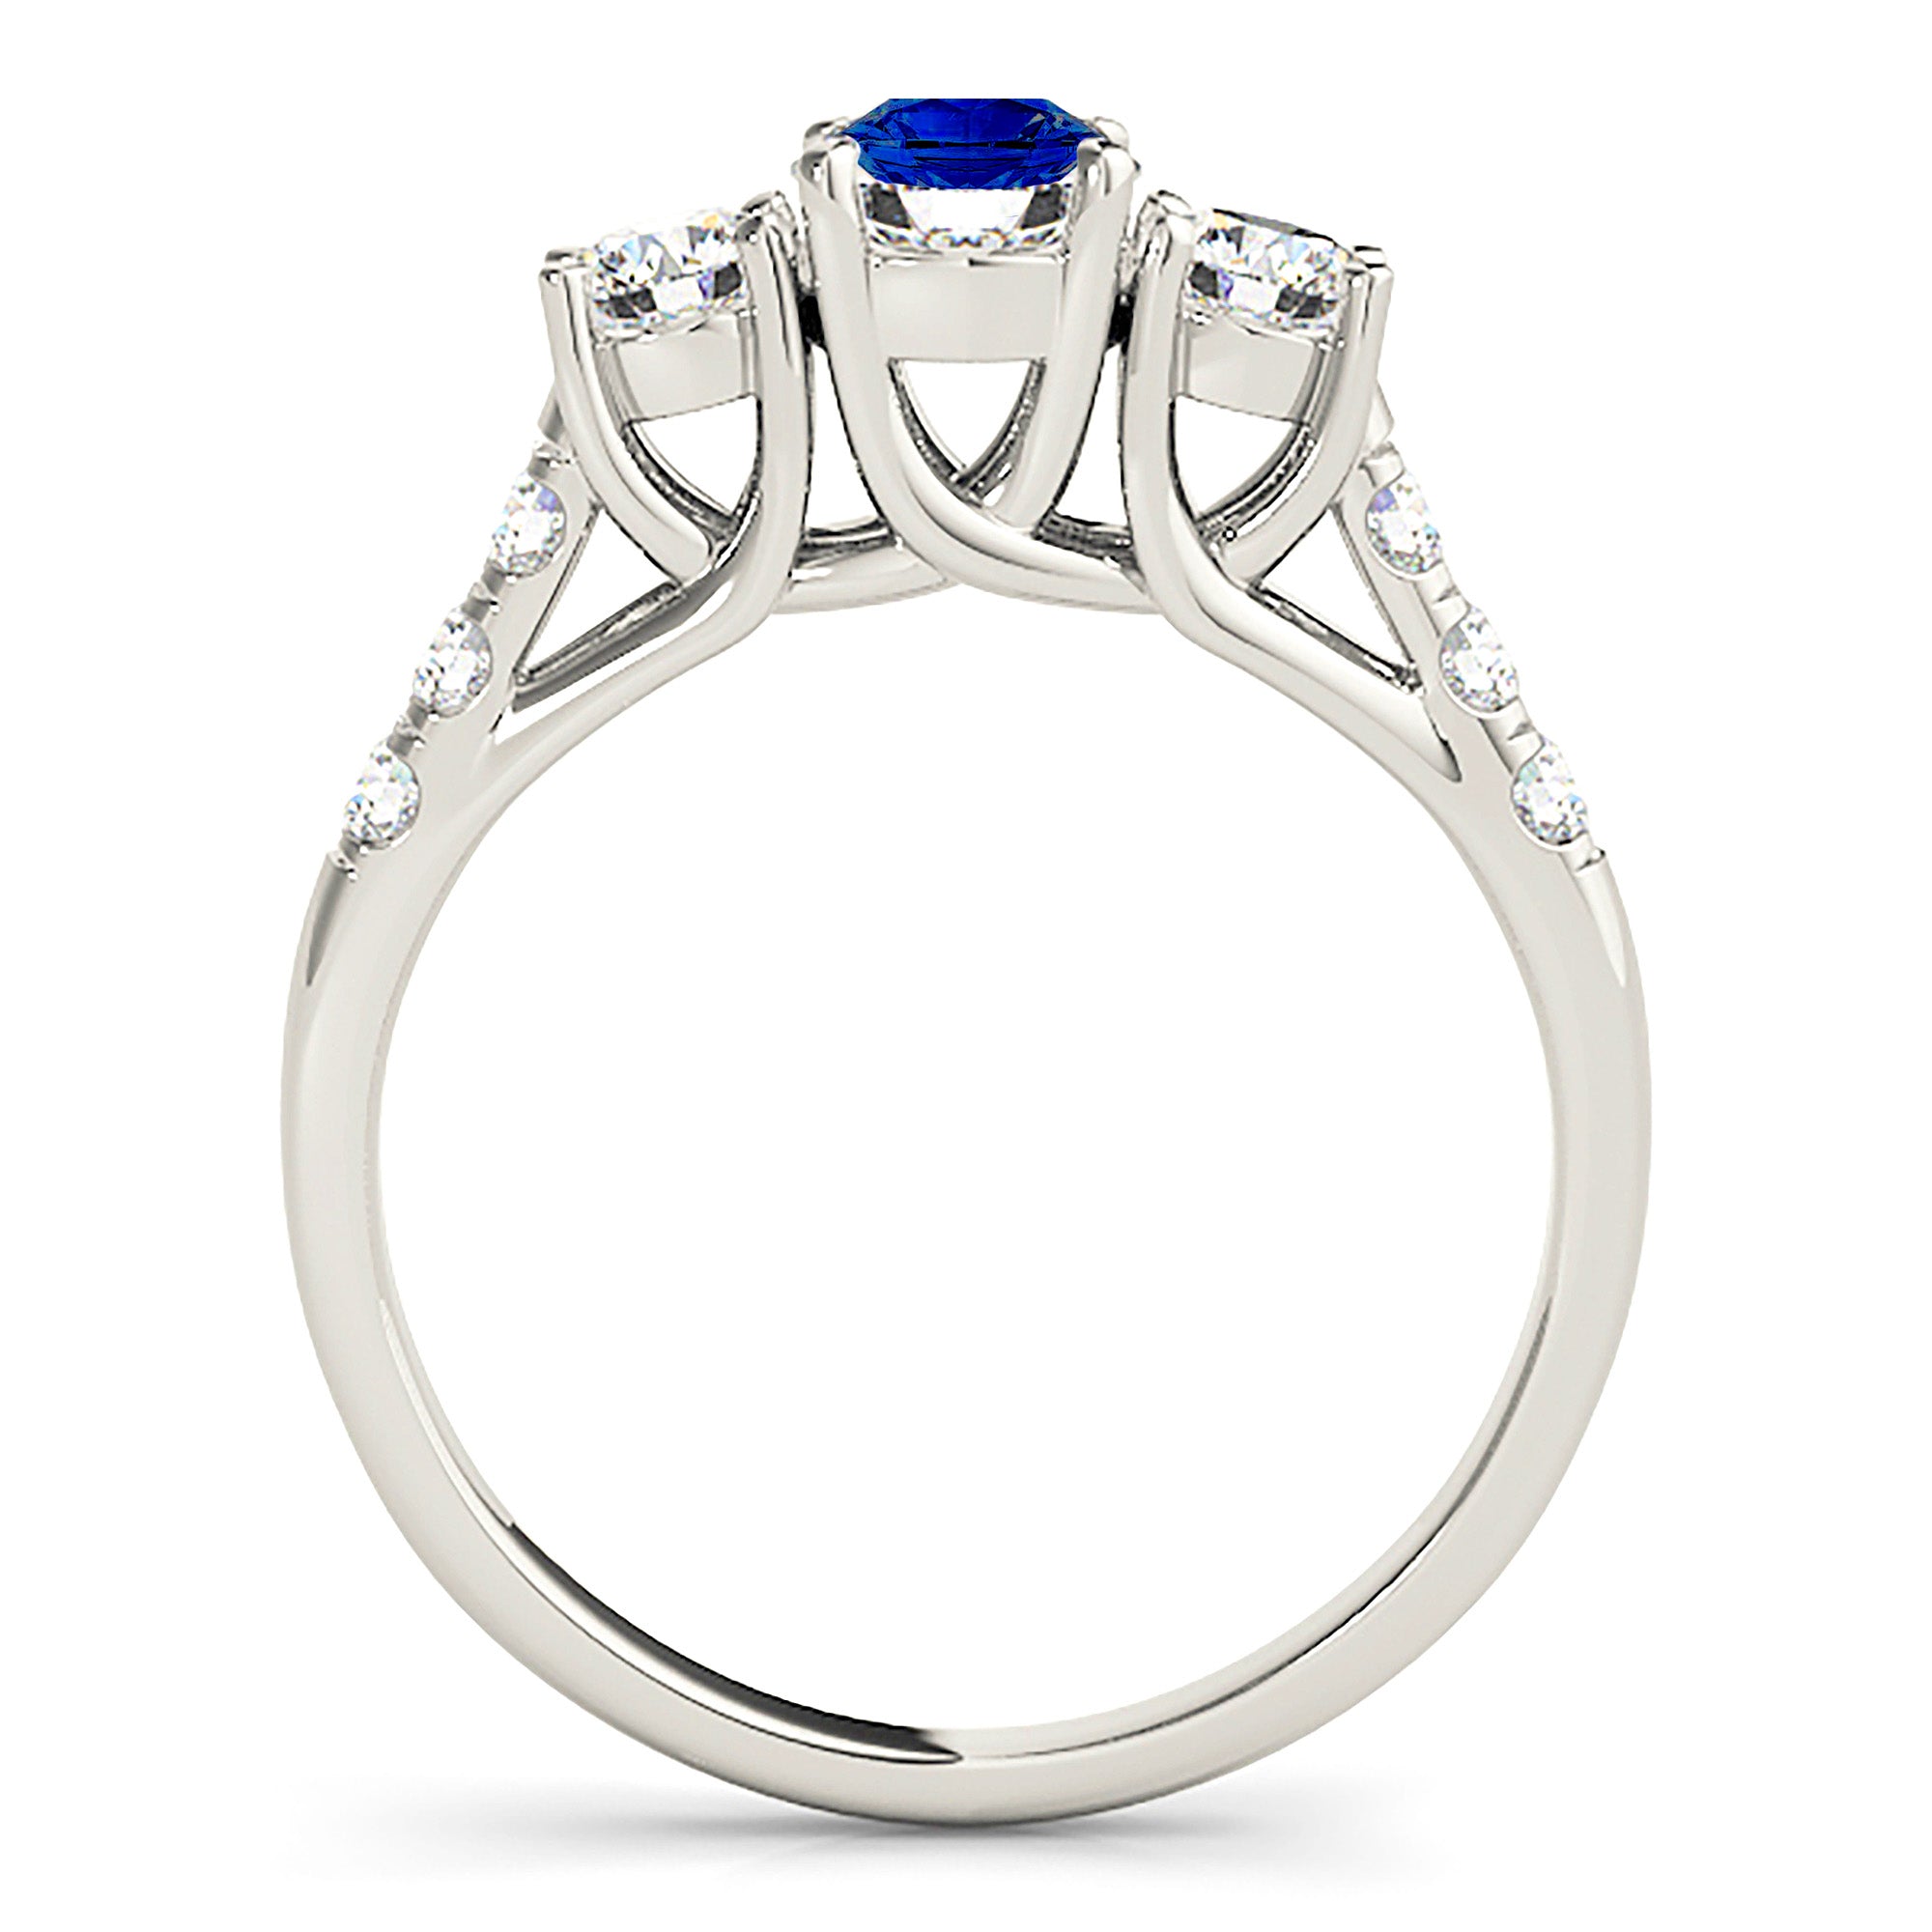 1.35 ct. Genuine Blue Sapphire Three Stone Ring With 0.55 ctw. Side Diamonds-in 14K/18K White, Yellow, Rose Gold and Platinum - Christmas Jewelry Gift -VIRABYANI